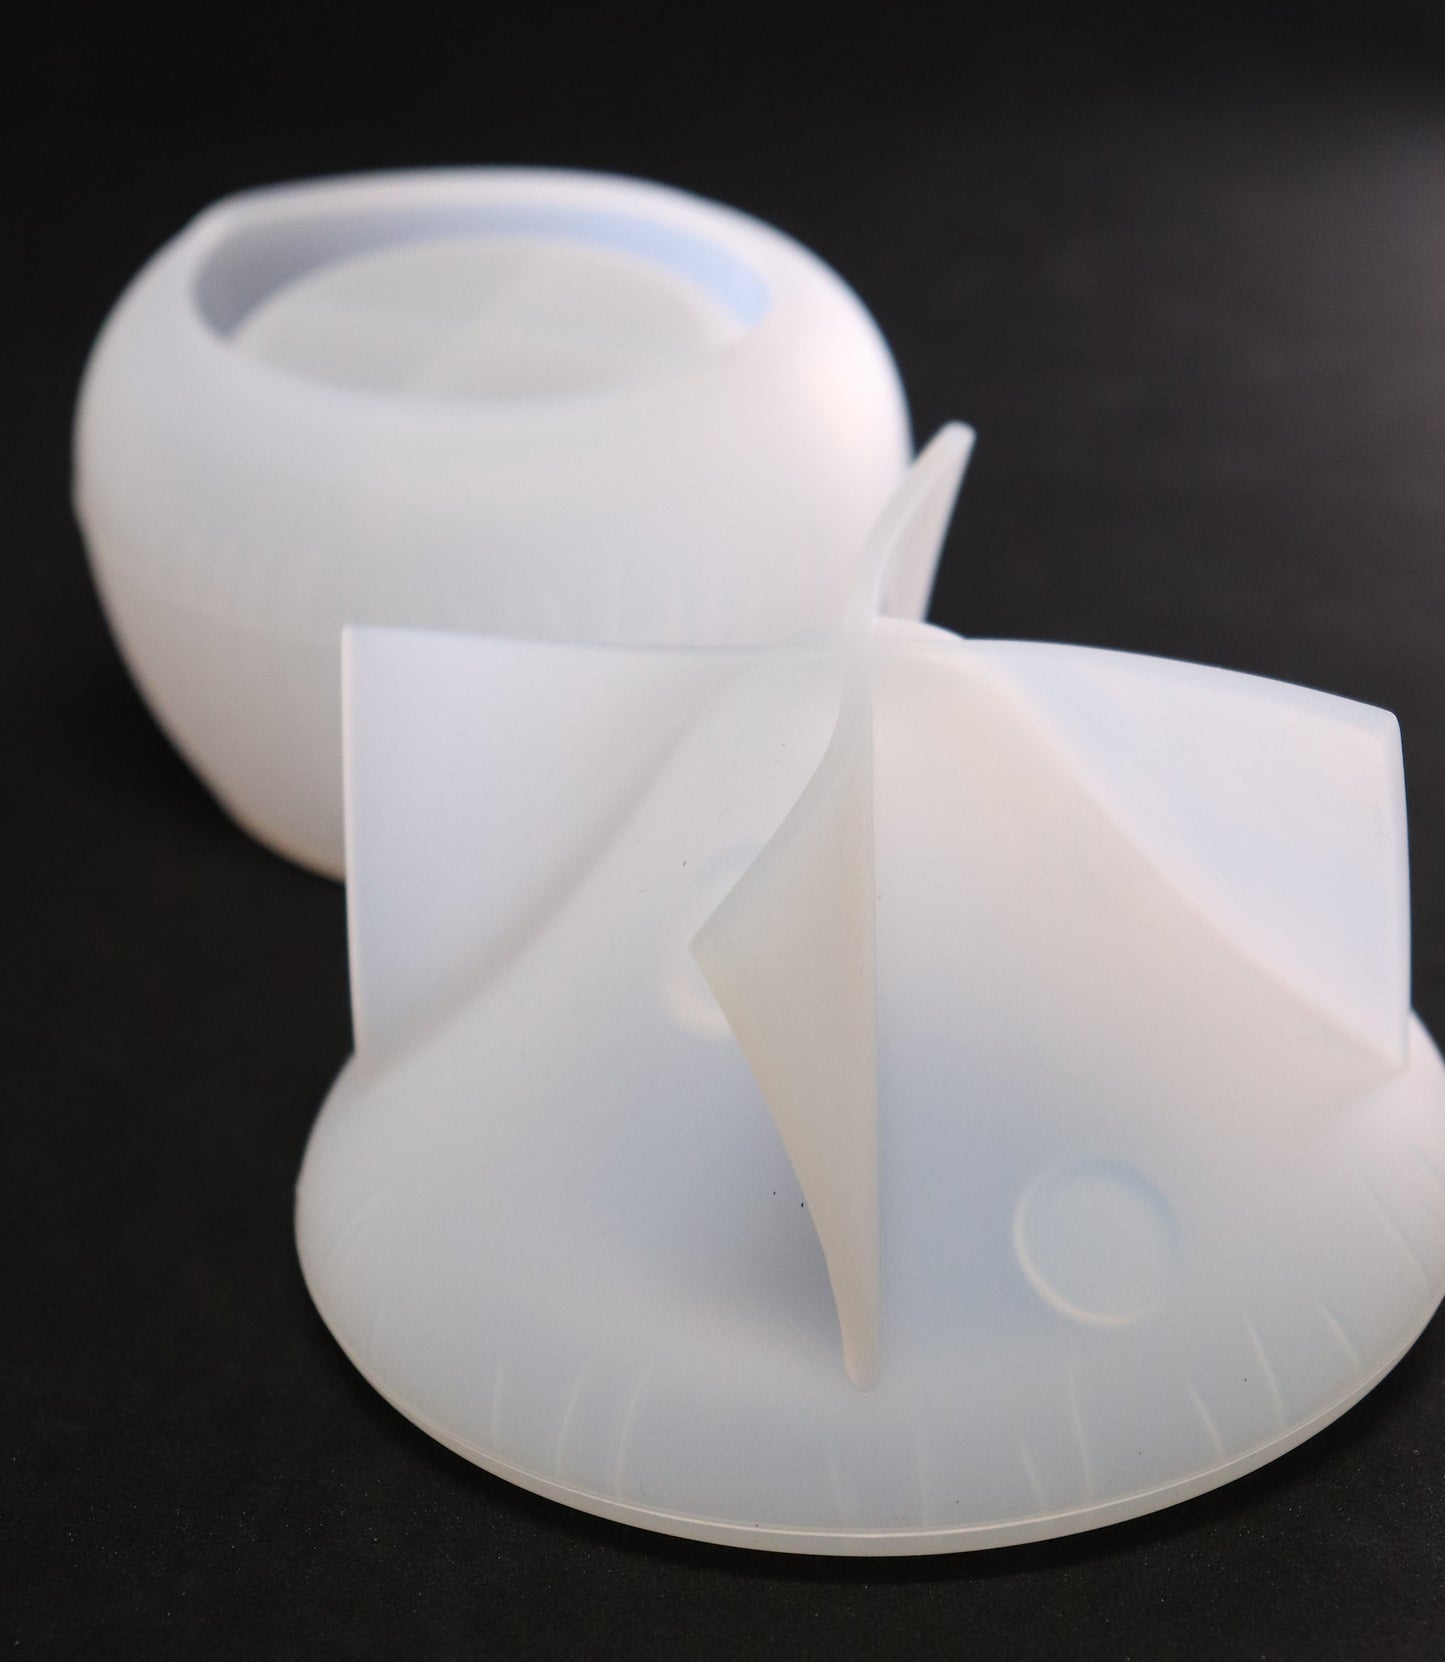 Silikonform 3D Pilz mit Deckel Gießform für Epoxidharz, Raysin ca. 10,5 cm